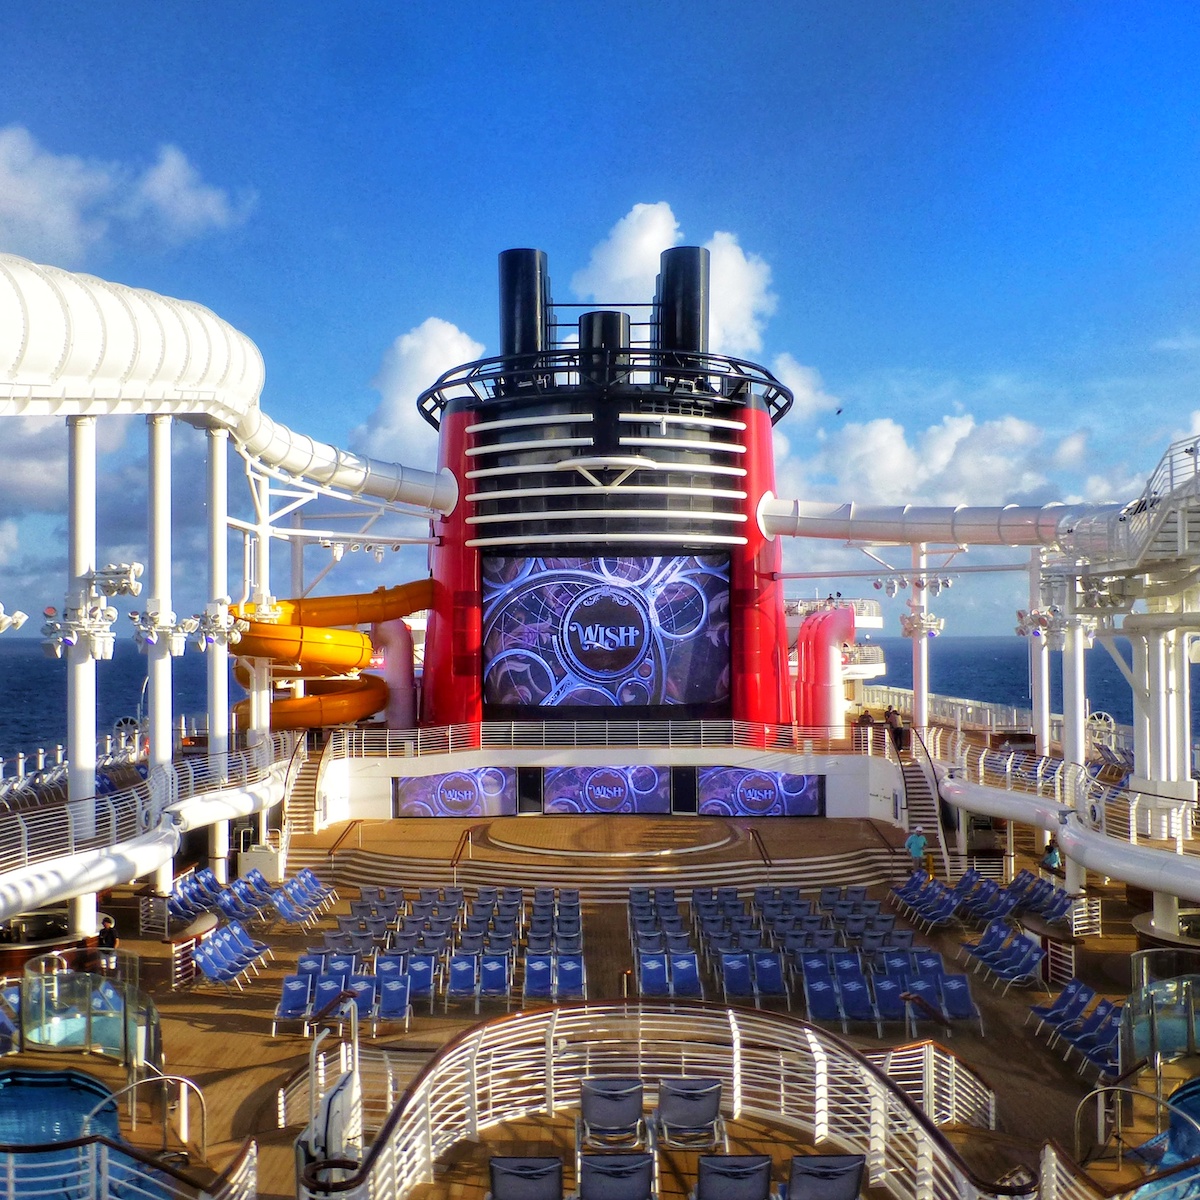 Disney Wish's upper deck featuring water attractions.